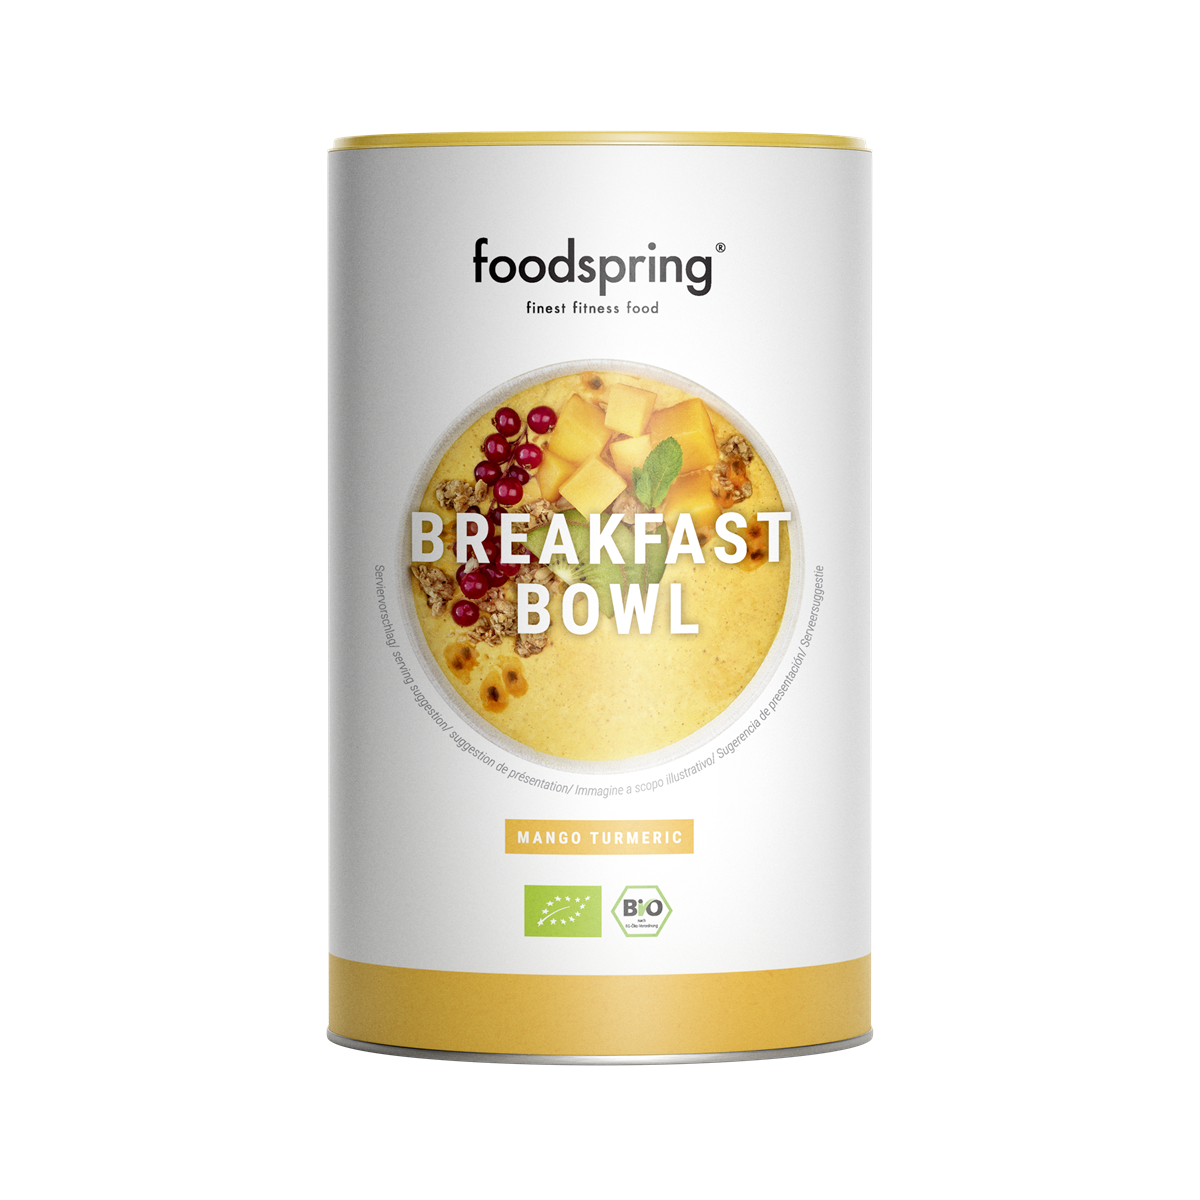 foodspring_Breakfast Bowl_Mango Kurkuma_EUR 19,99